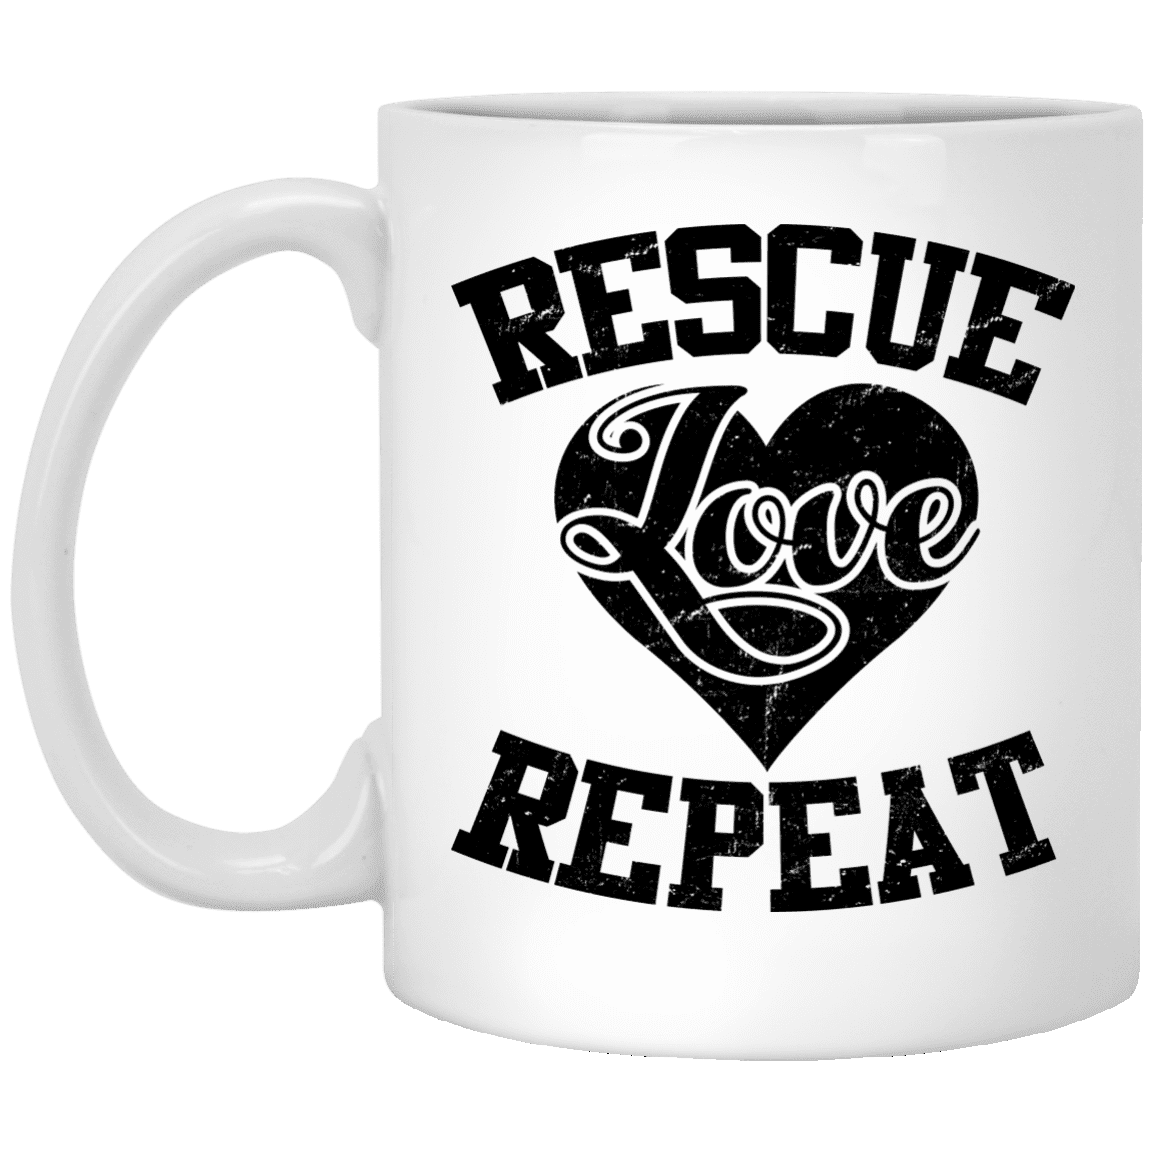 Rescue Love Repeat - Mugs.